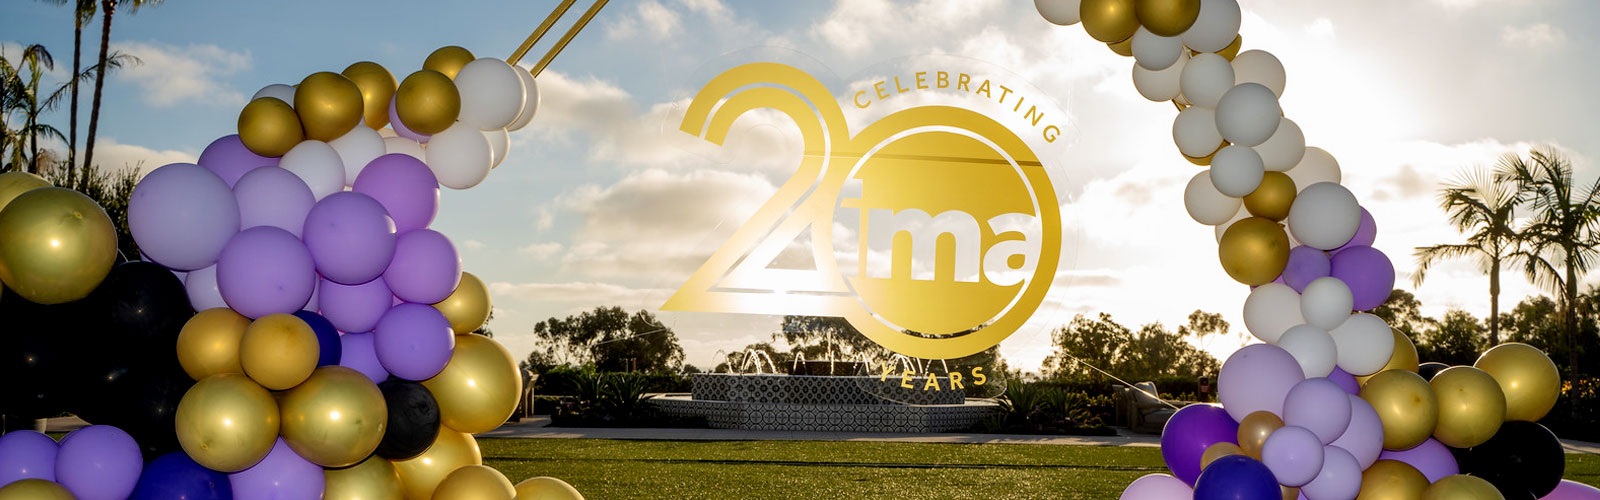 2021 Top to Top - IMA 20th Anniversary